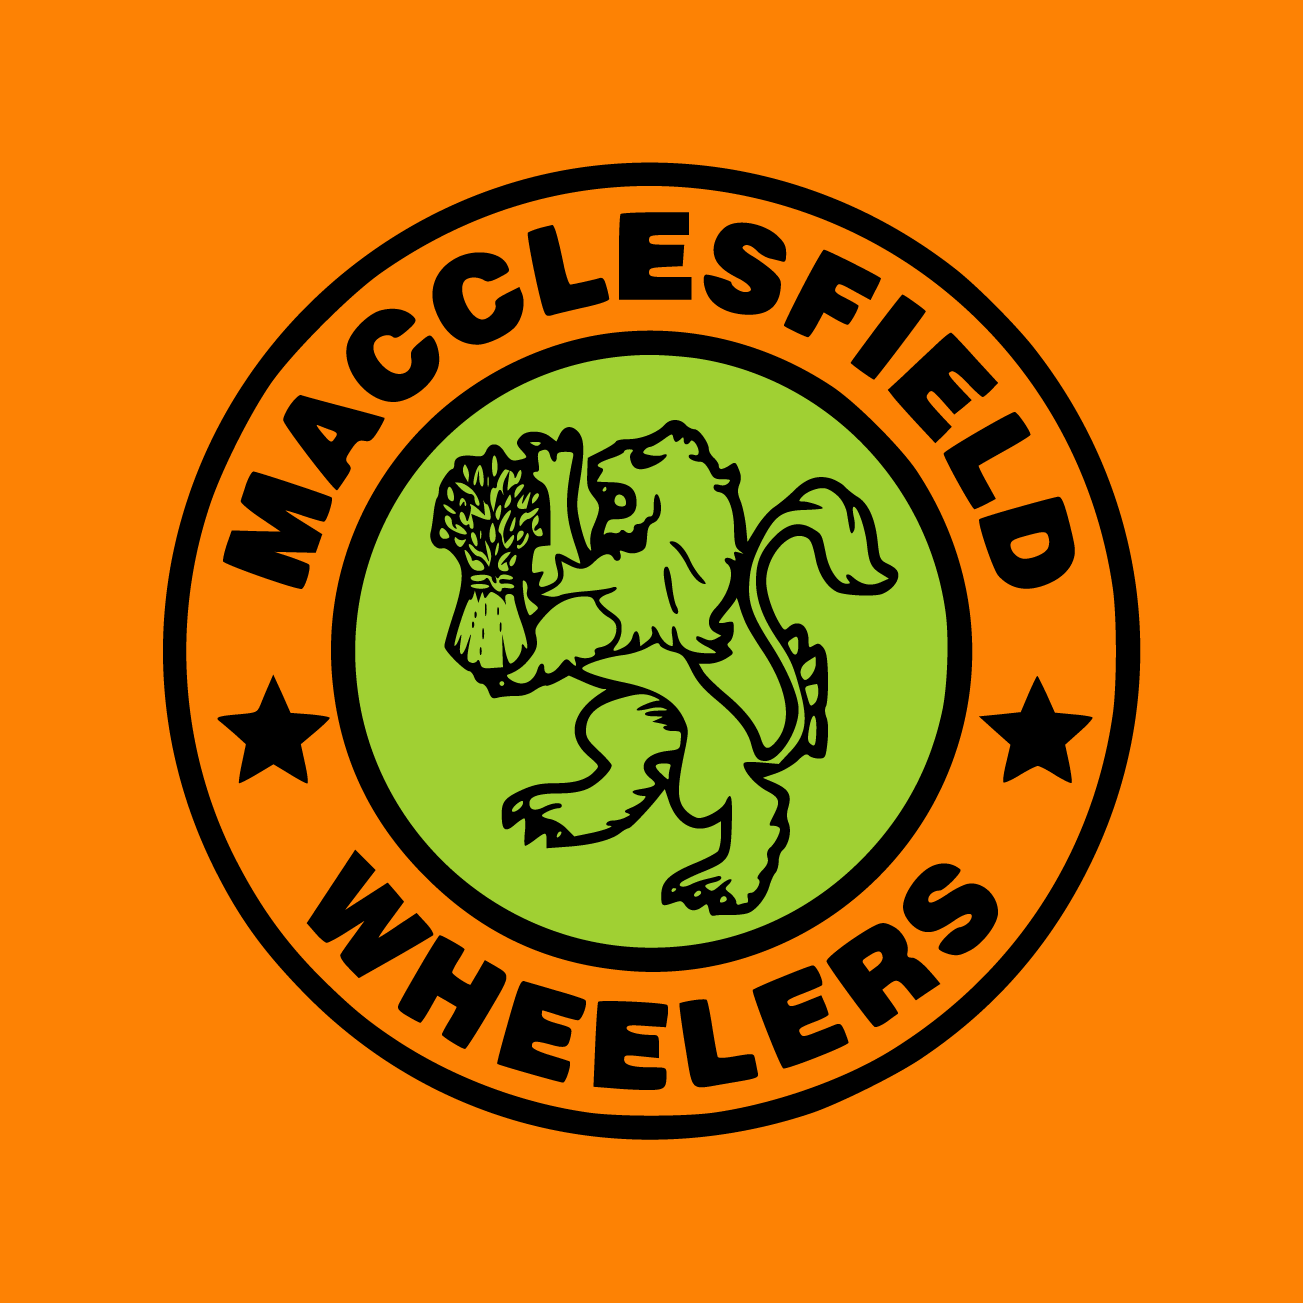 Club Image for MACCLESFIELD WHEELERS